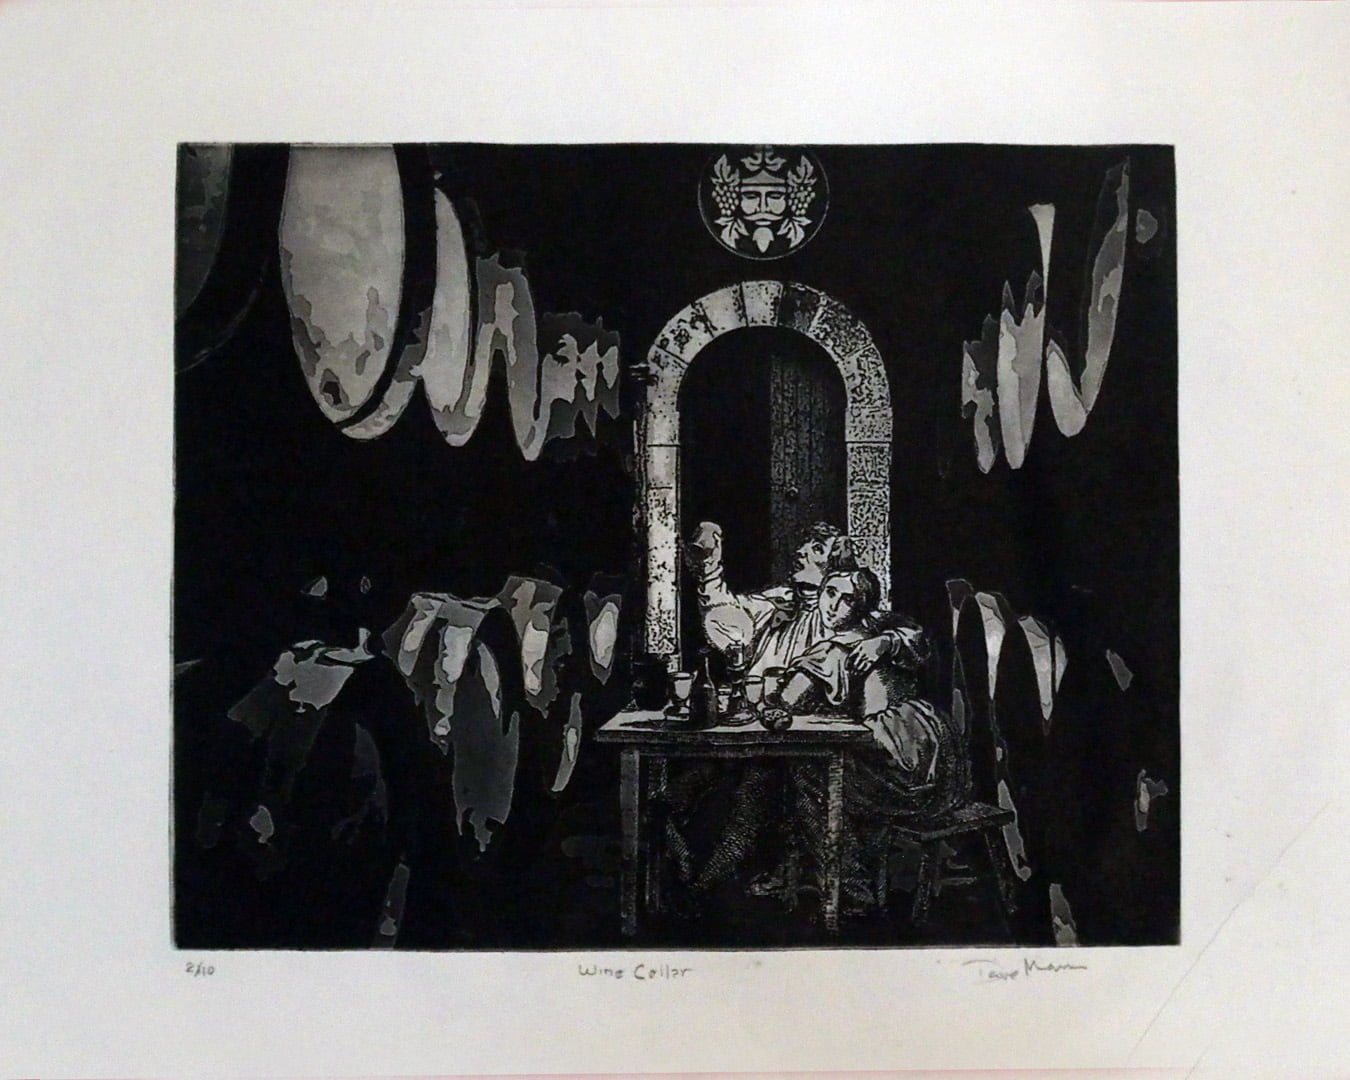 David Mann – Wine Cellar